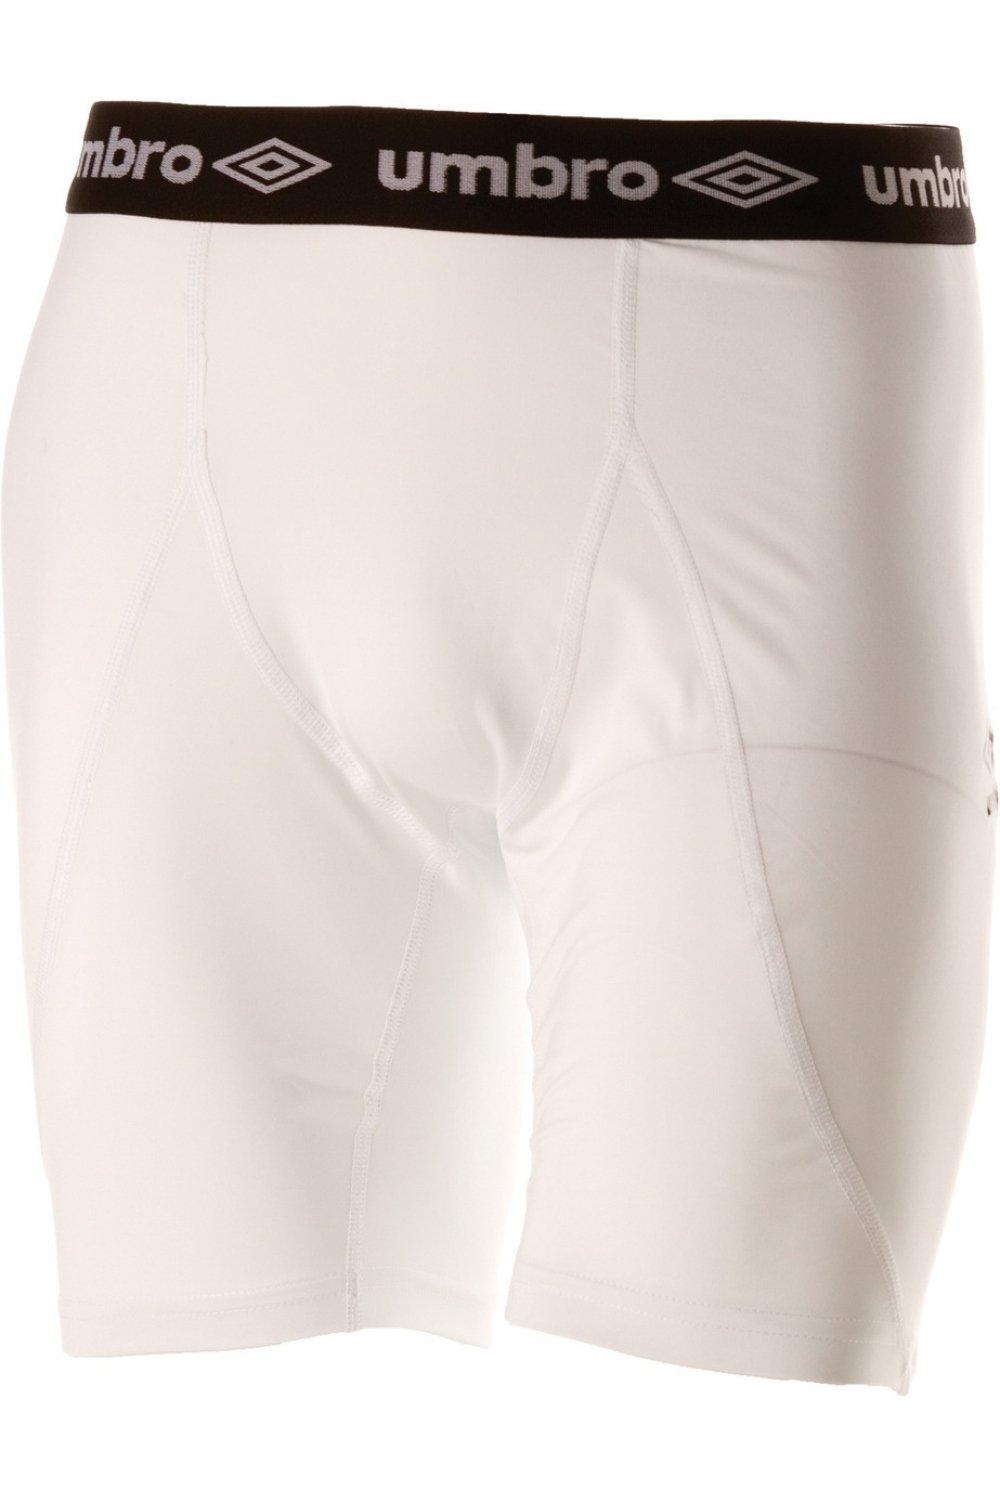 Мужские шорты Core Power Umbro, белый umbro paton pi